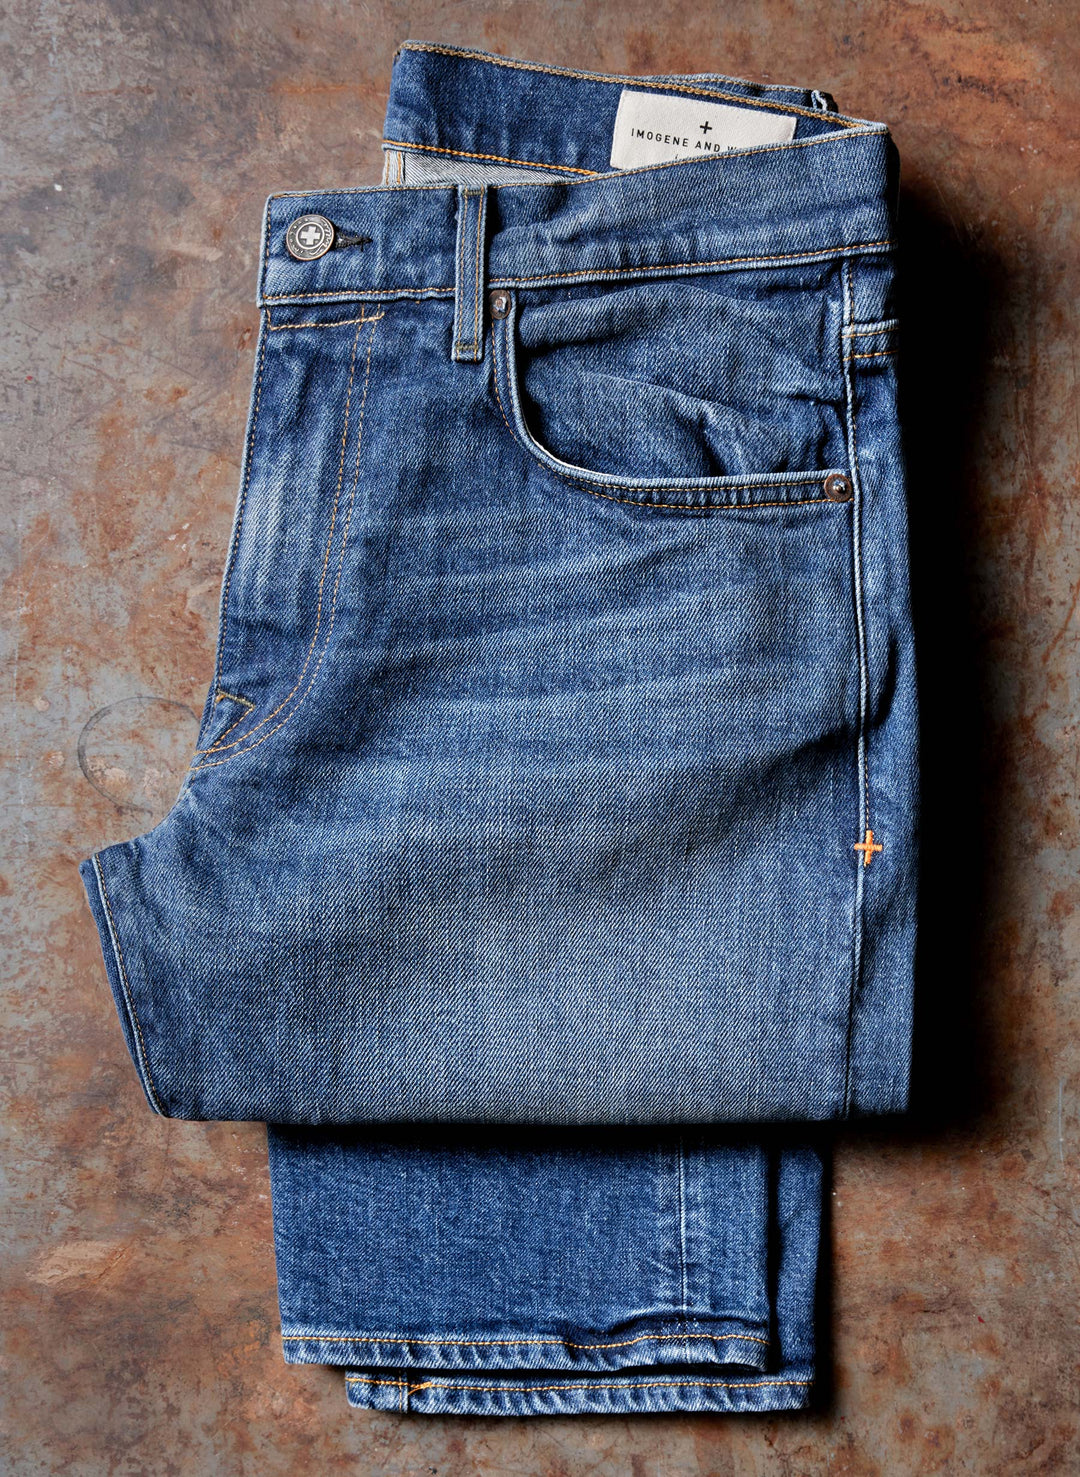 Jeans, Hand, Human body, Sleeve, Denim, Electric blue, Button, Pattern, Pocket, Beige